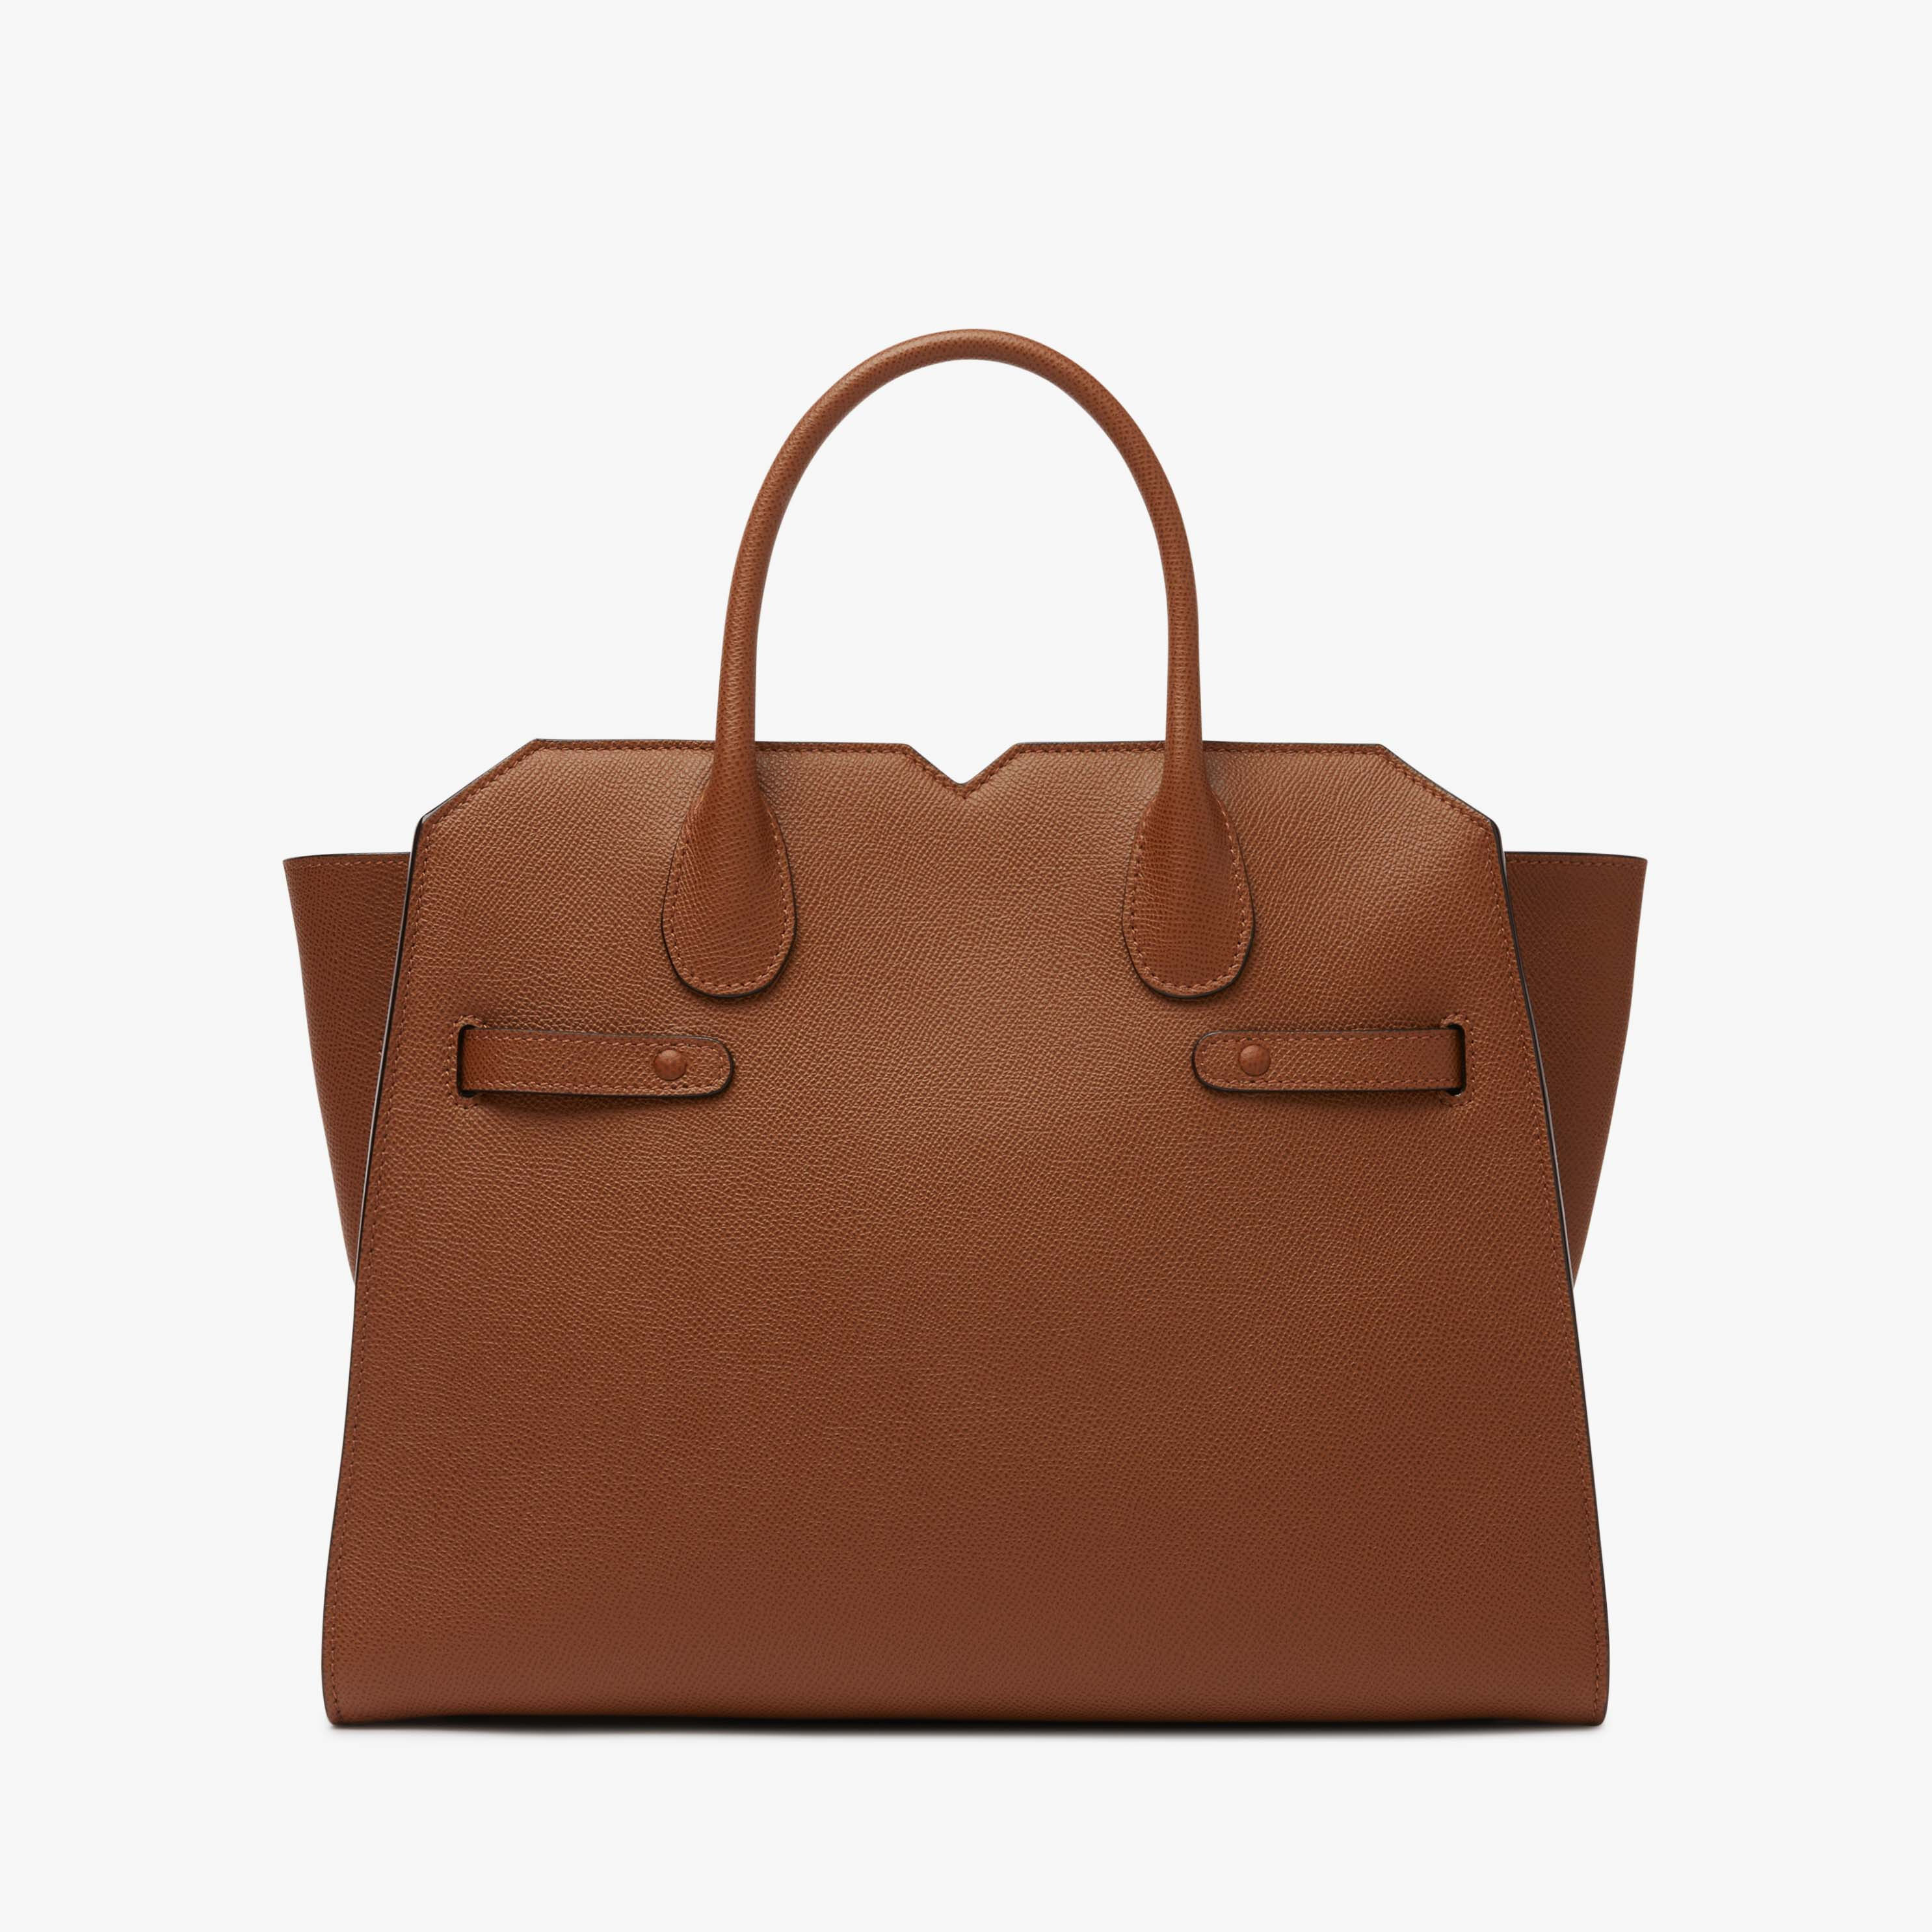 Made in Italy leather handbags, Men & Women's purses | Valextra